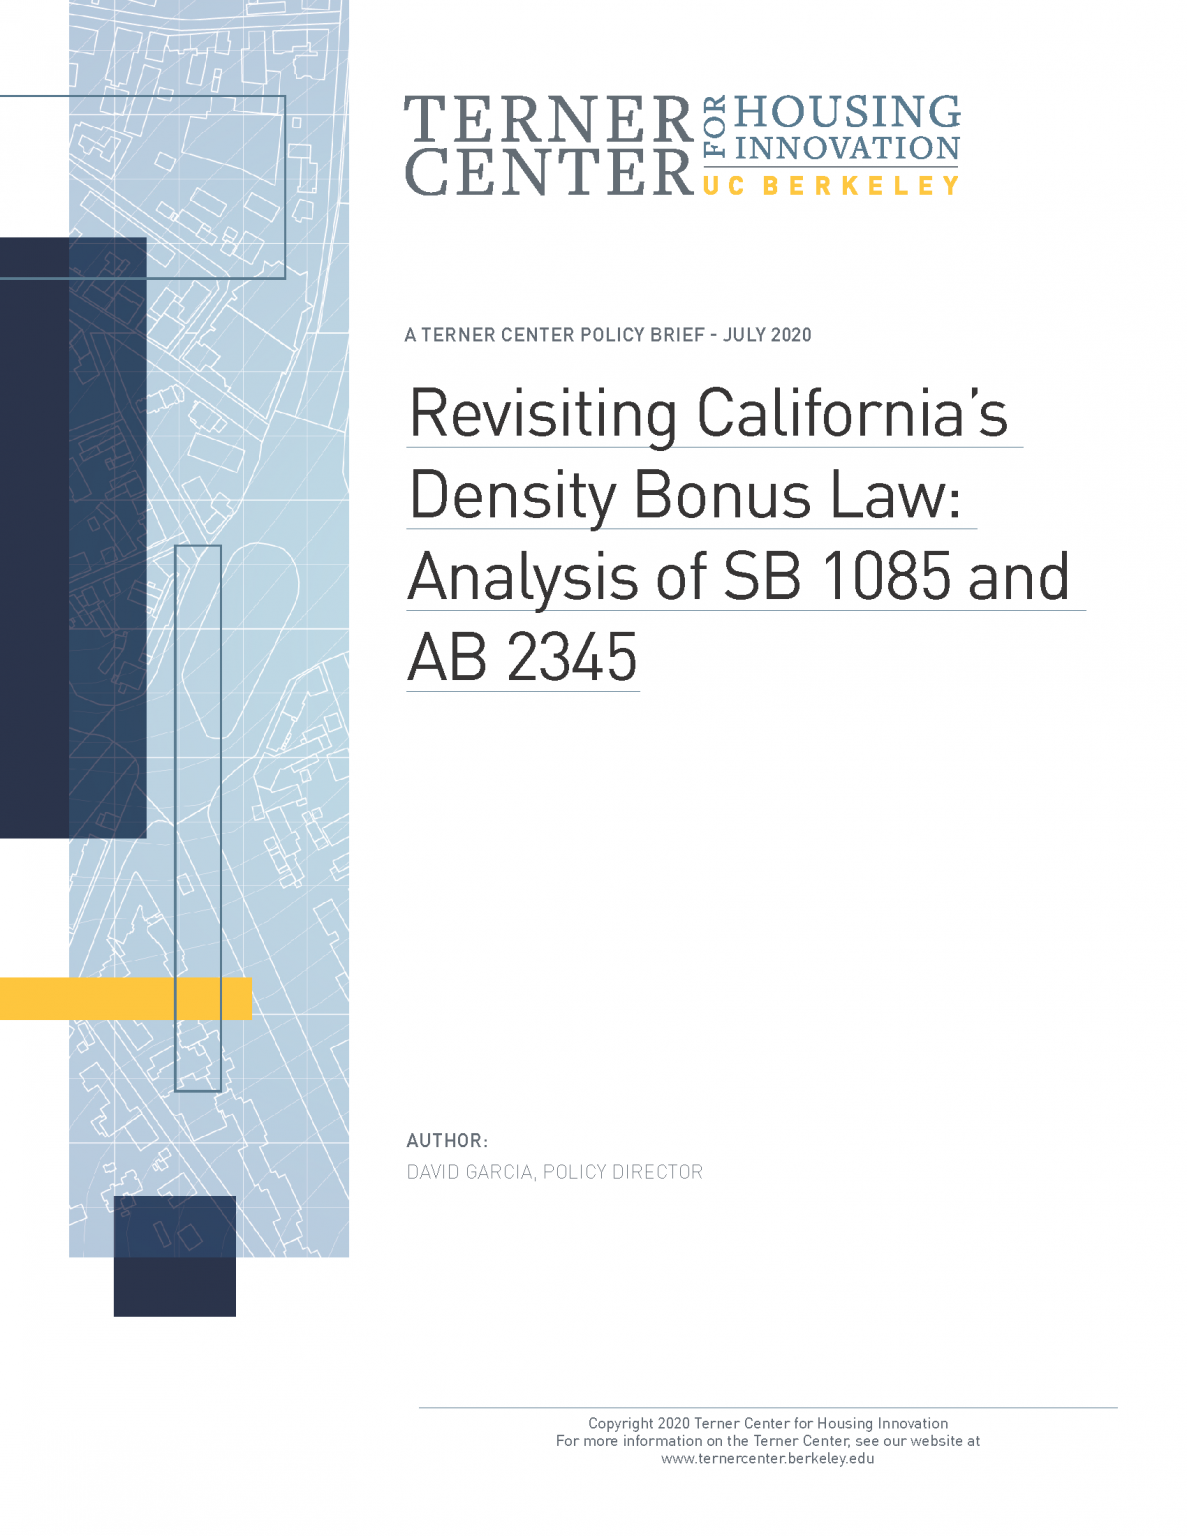 Revisiting California's Density Bonus Law Analysis of SB 1085 and AB